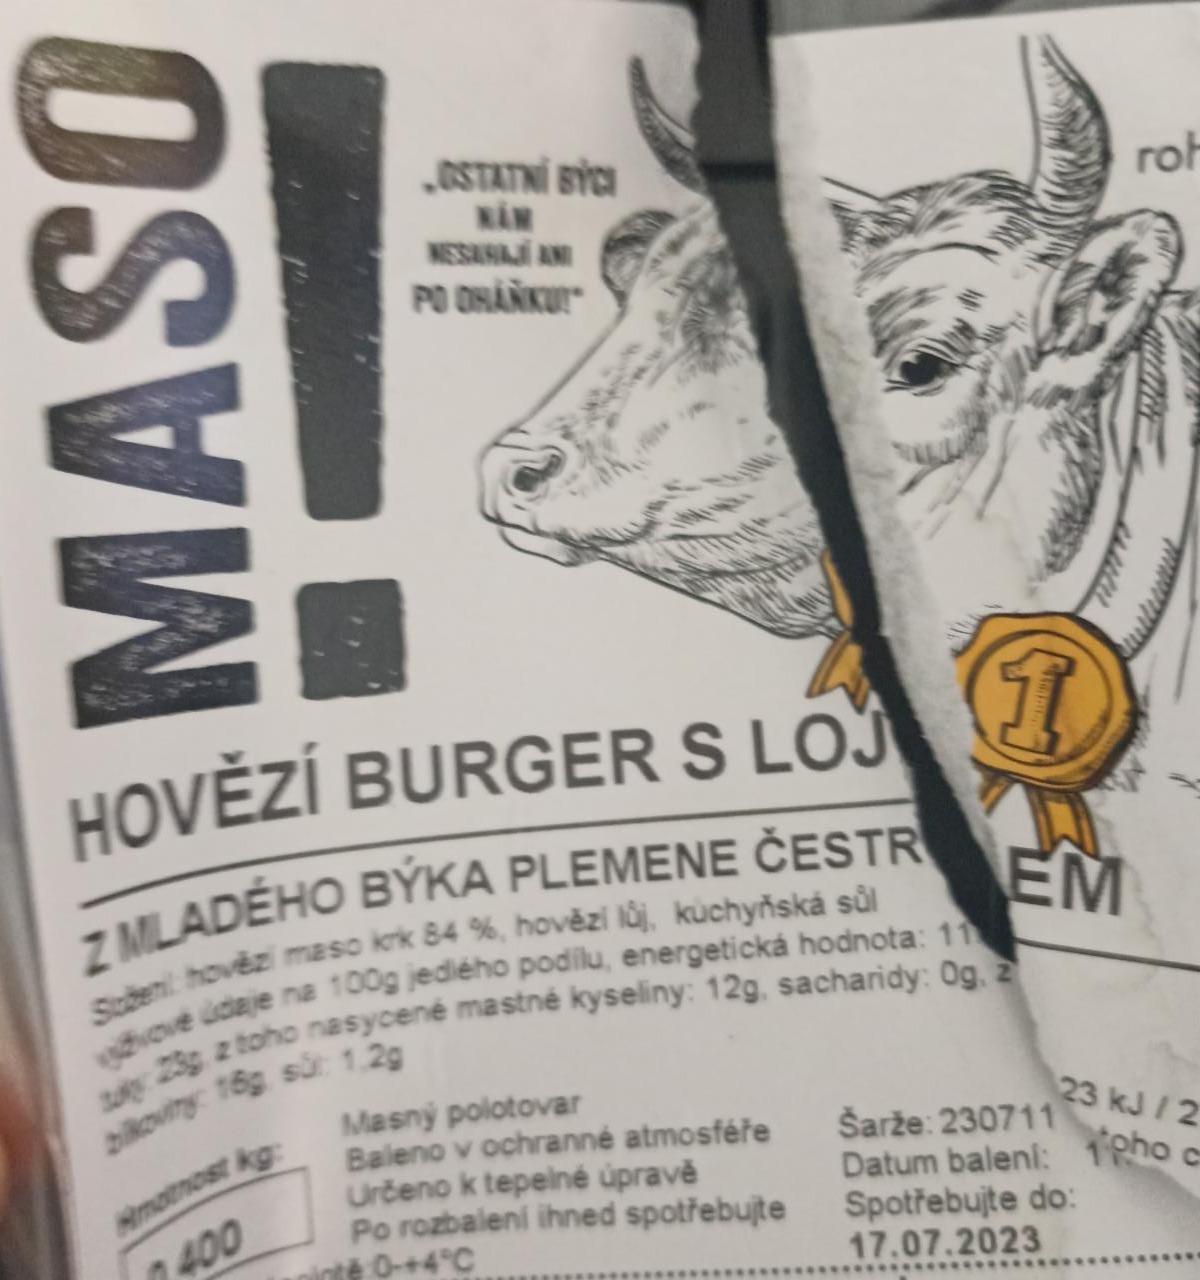 Fotografie - Hovězí burger s lojem z mladého býka plemene Čestr Maso